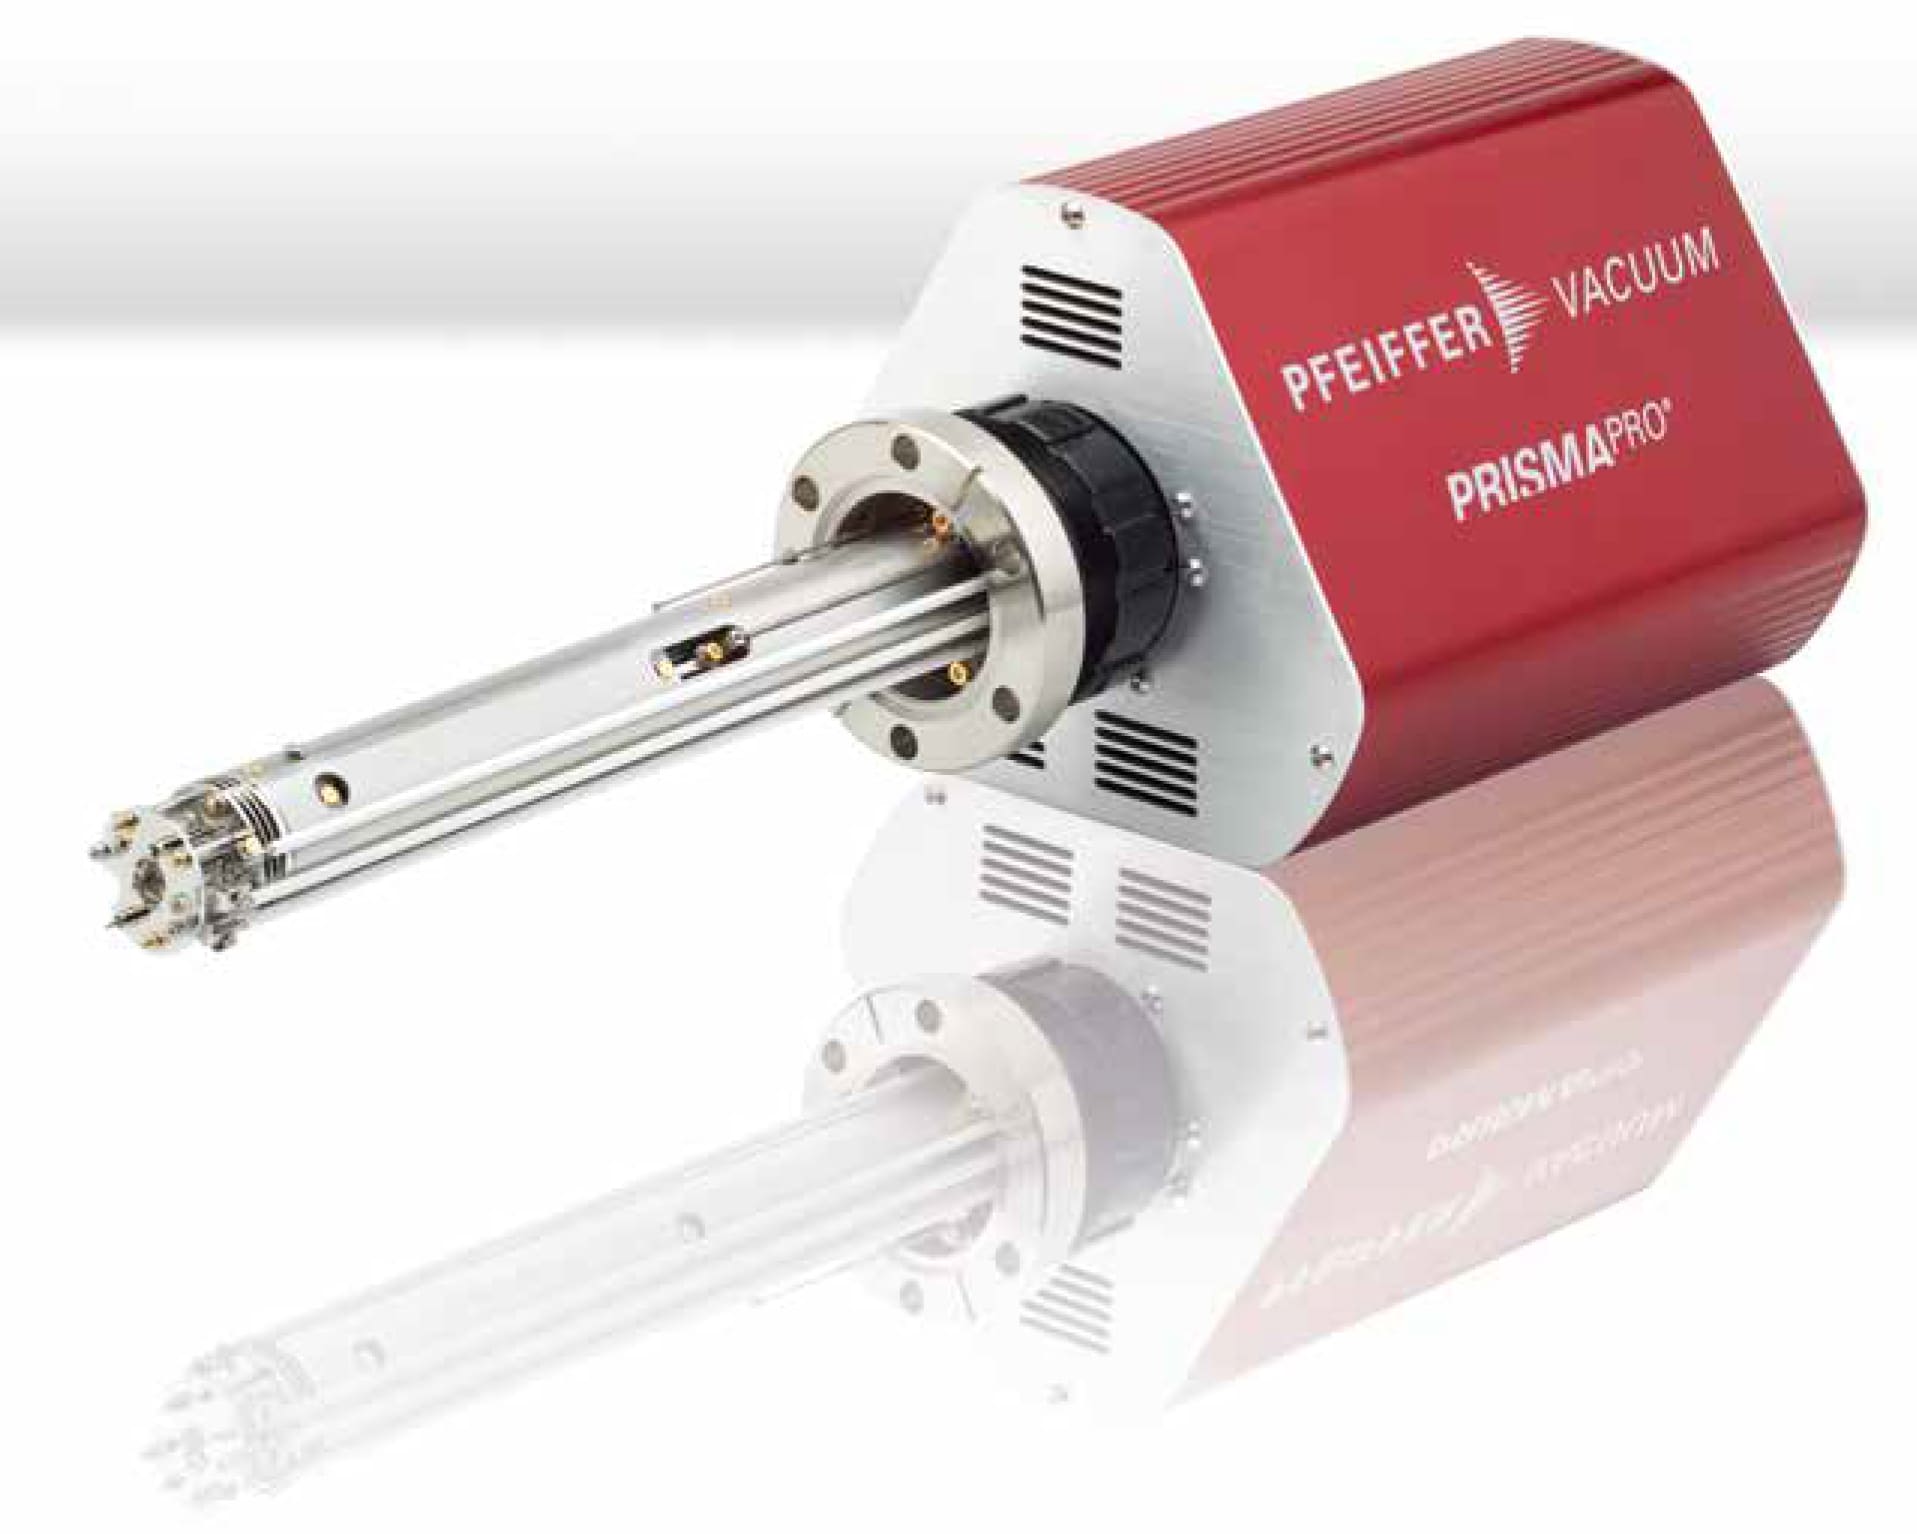  Pfeiffer 残余气体分析仪 PrismaPro